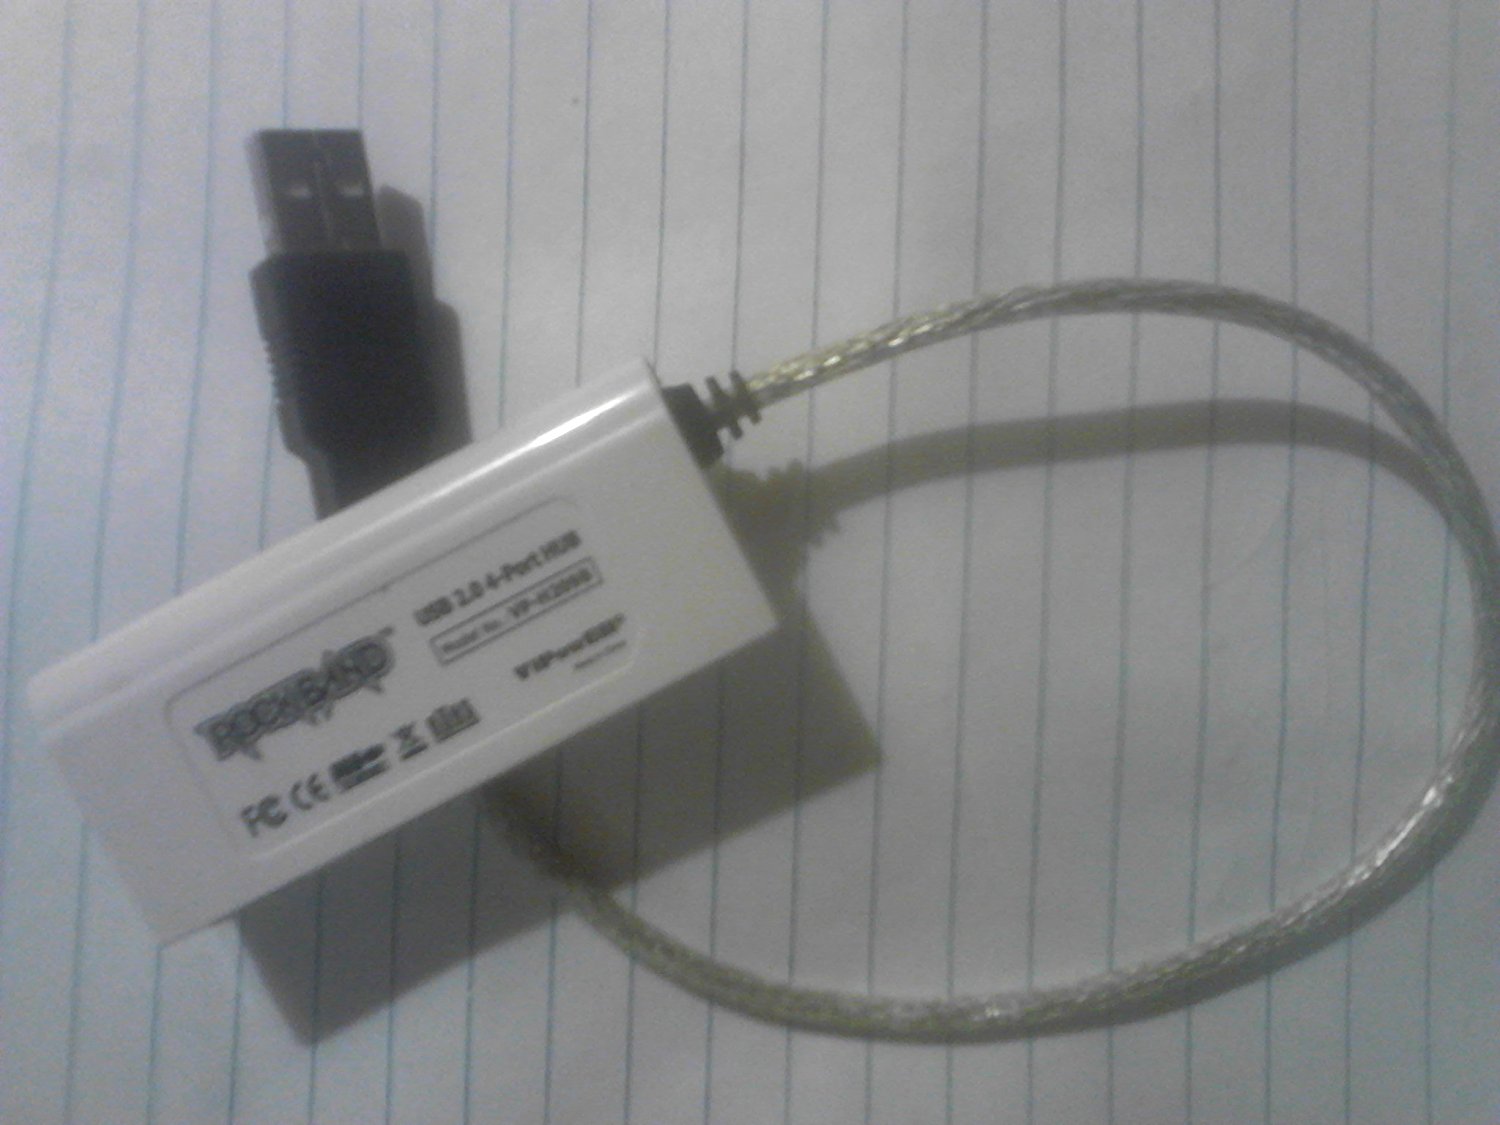 PS2: ROCK BAND USB 2.0 4-PORT POWERED HUB (USED)